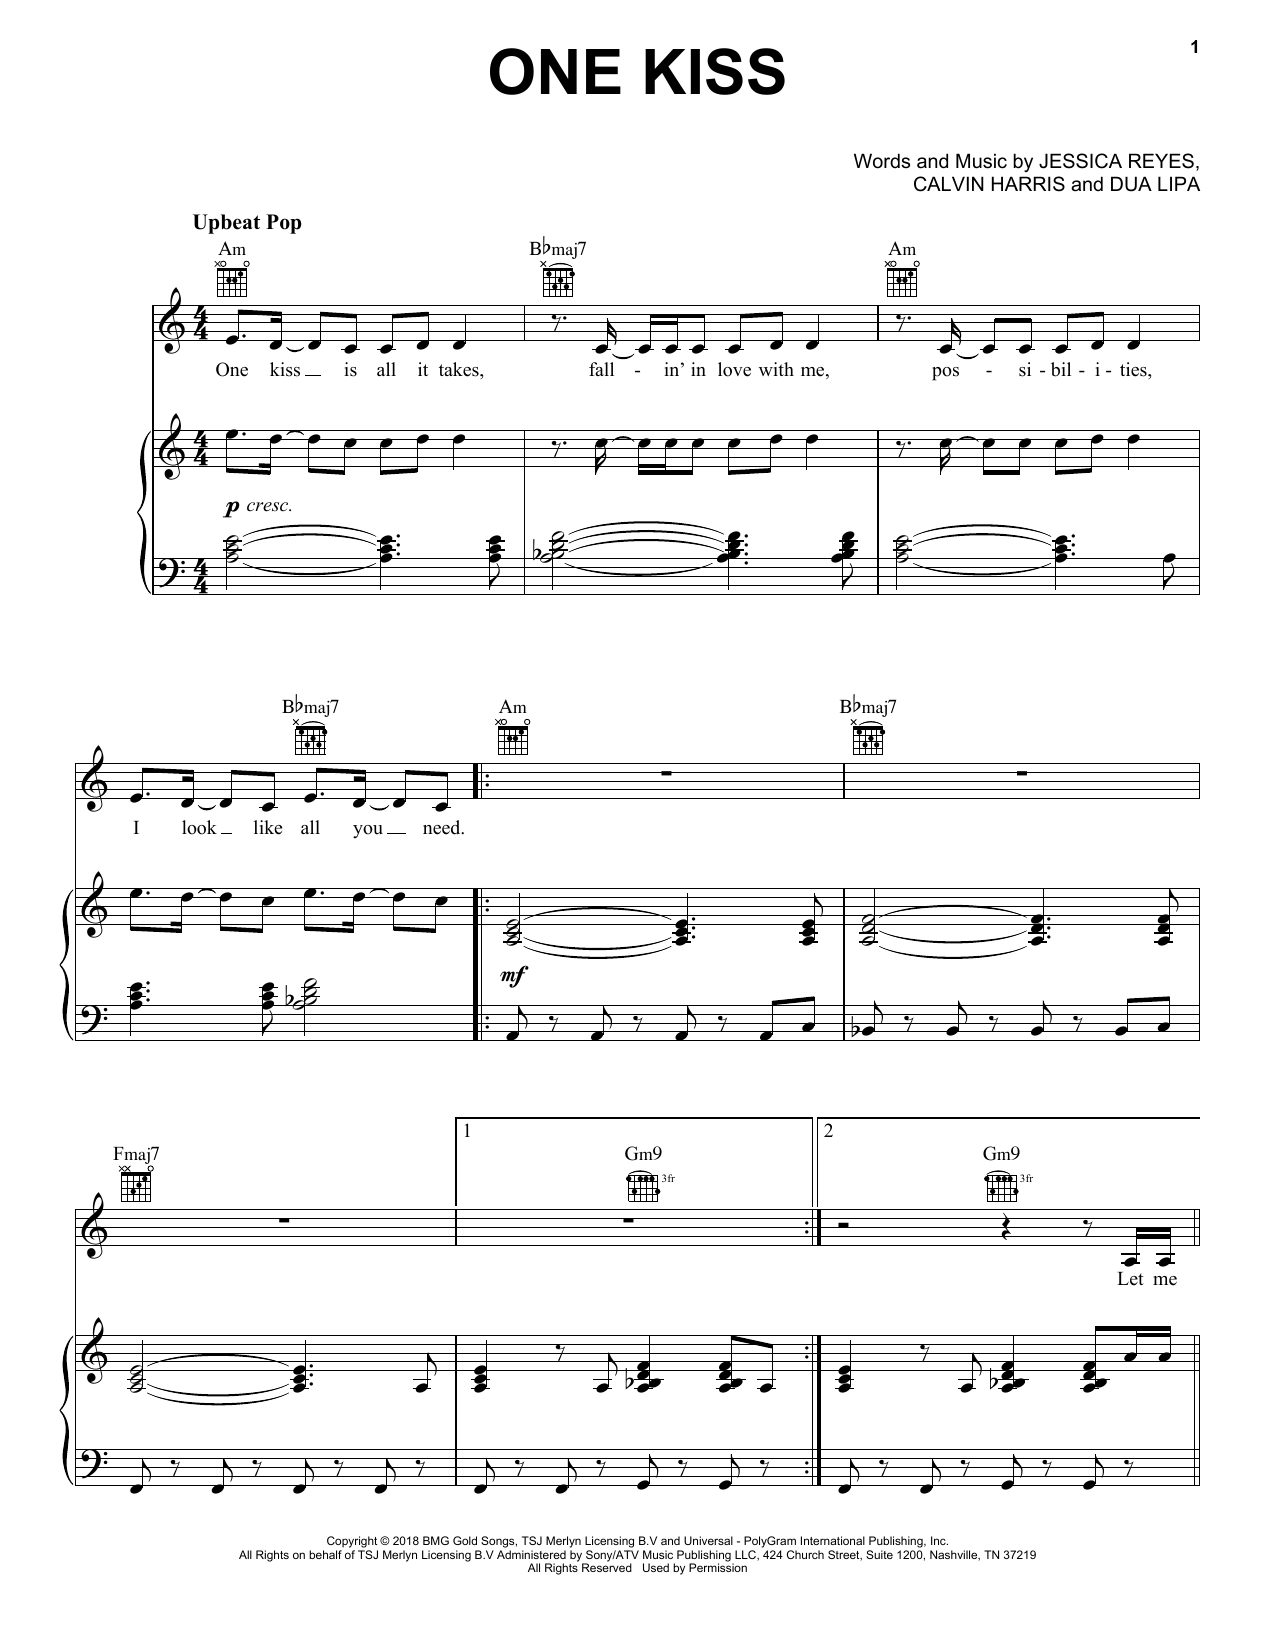 Download Calvin Harris & Dua Lipa One Kiss Sheet Music and learn how to play Ukulele PDF digital score in minutes